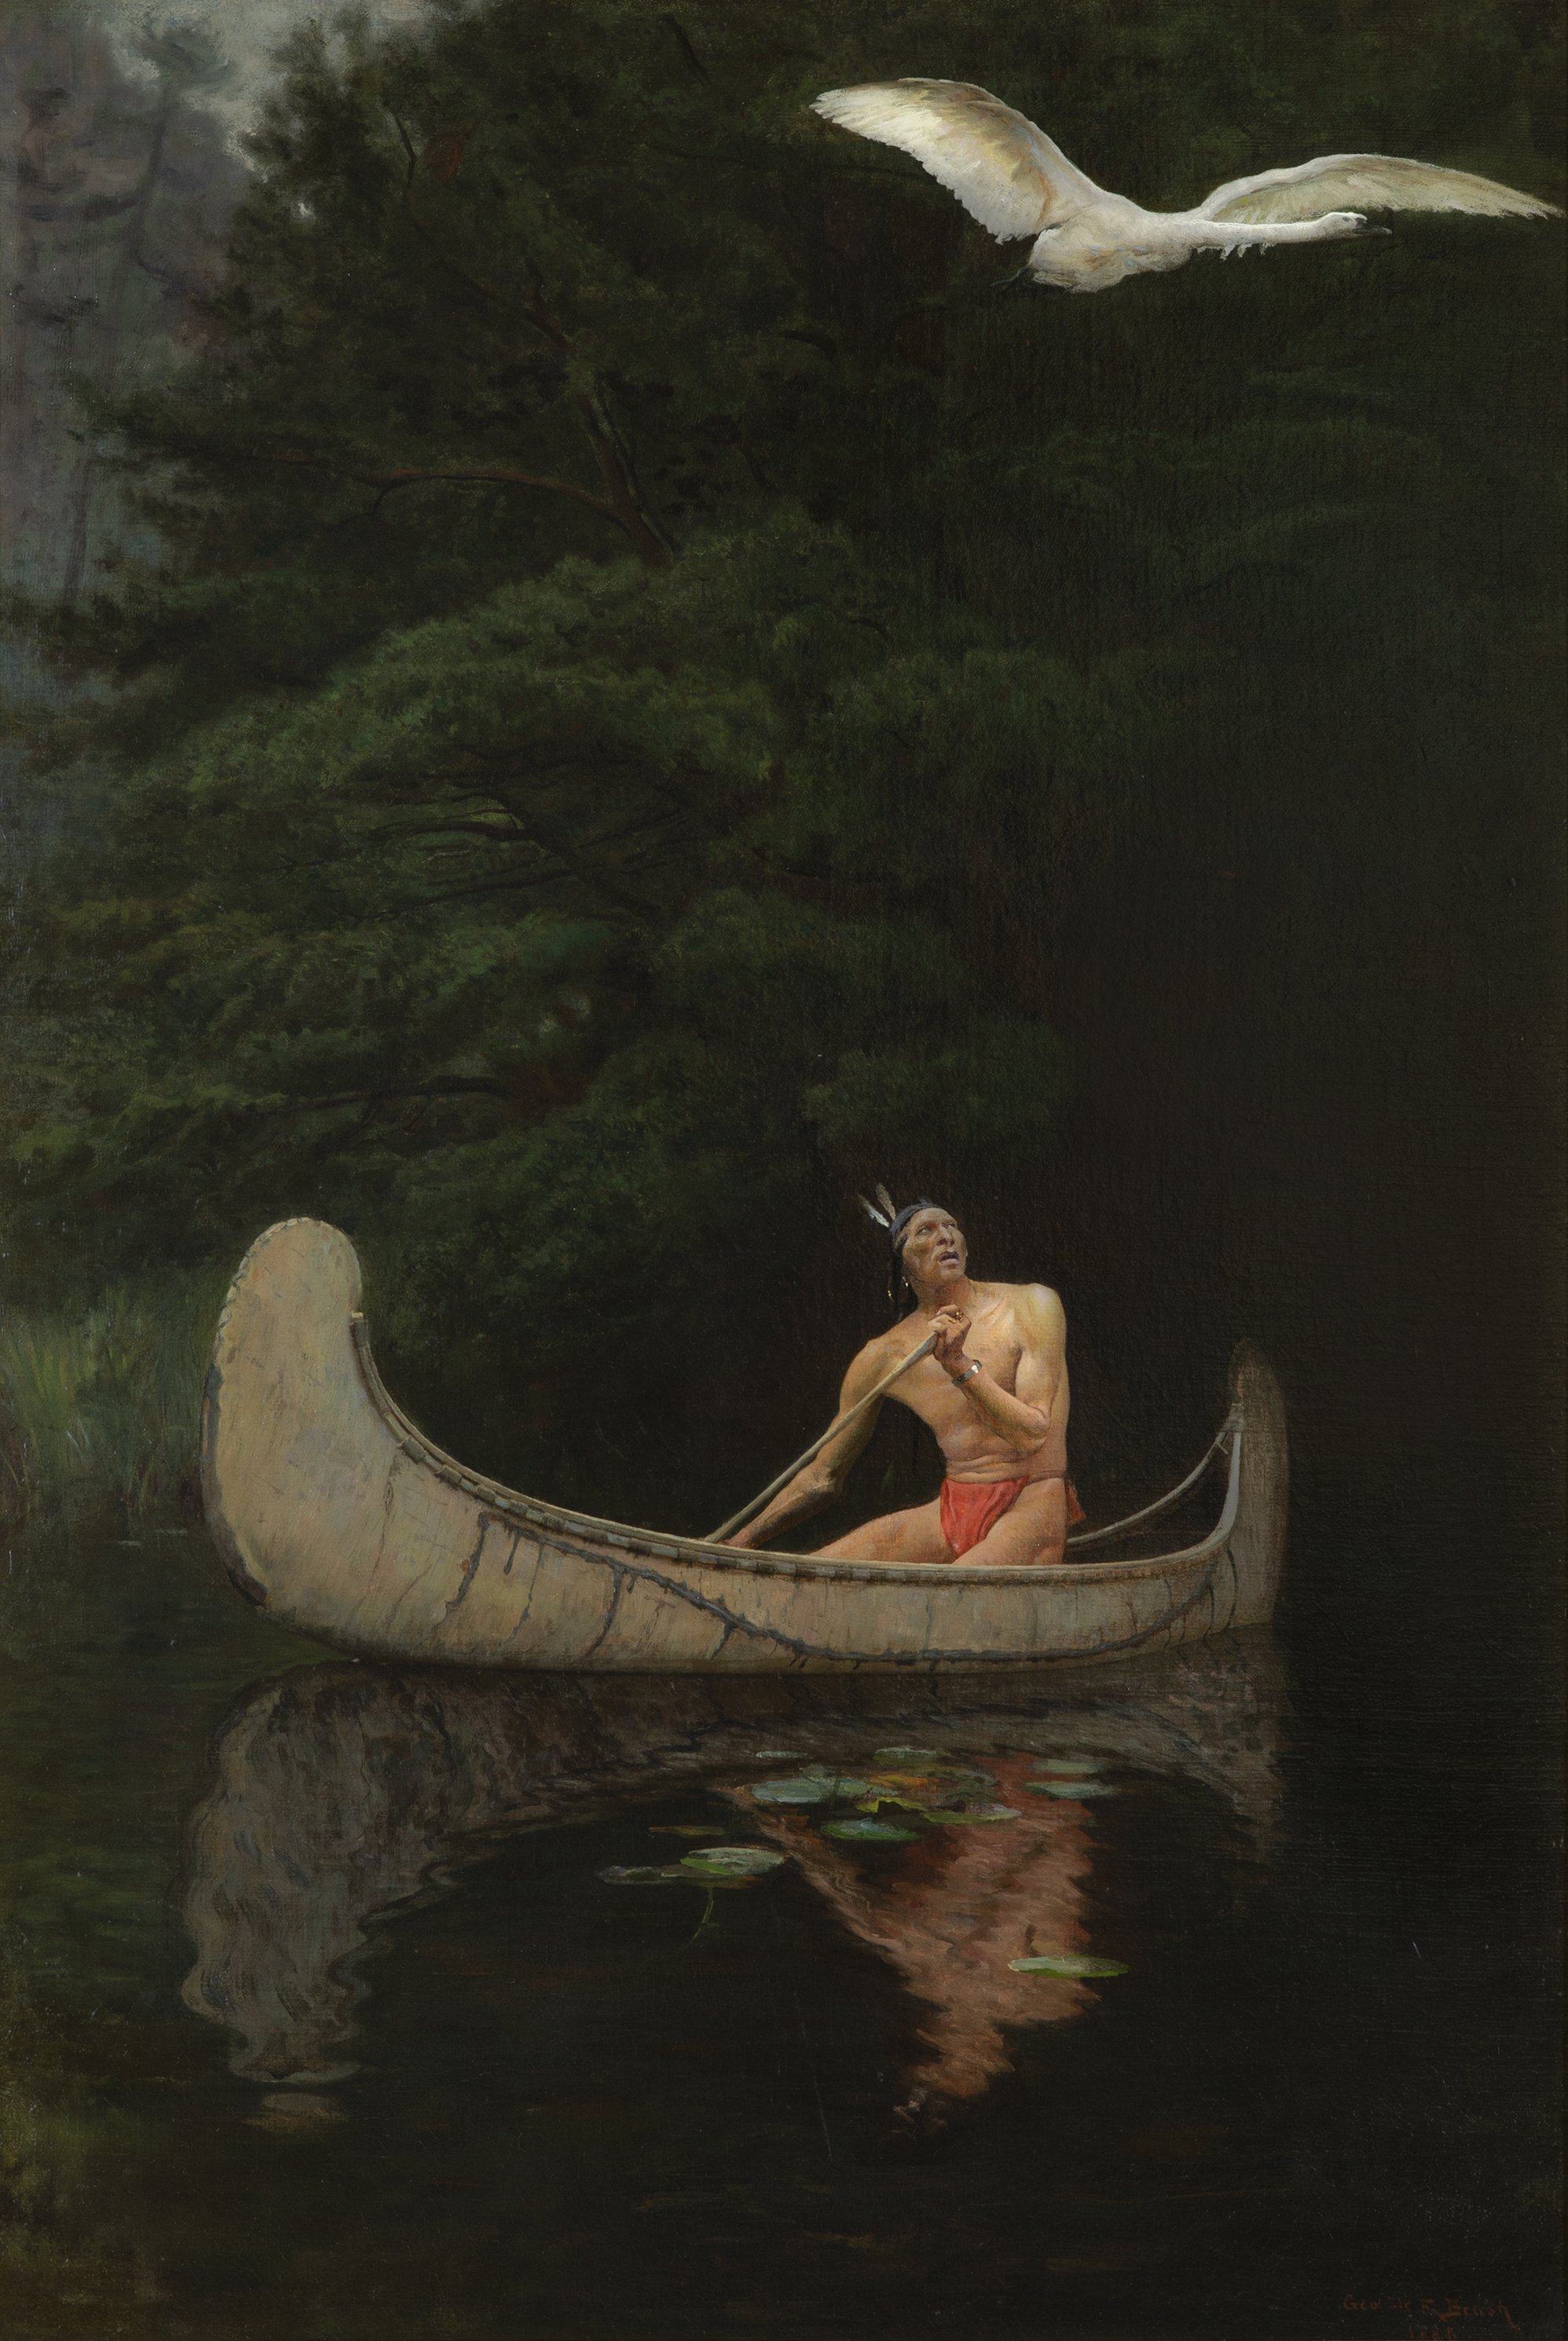  GEORGE DE FOREST BRUSH (1855-1941)     The Silence Broken ,&nbsp;1886.&nbsp;Oil on canvas.&nbsp;26.75 x 18.25 inches. 